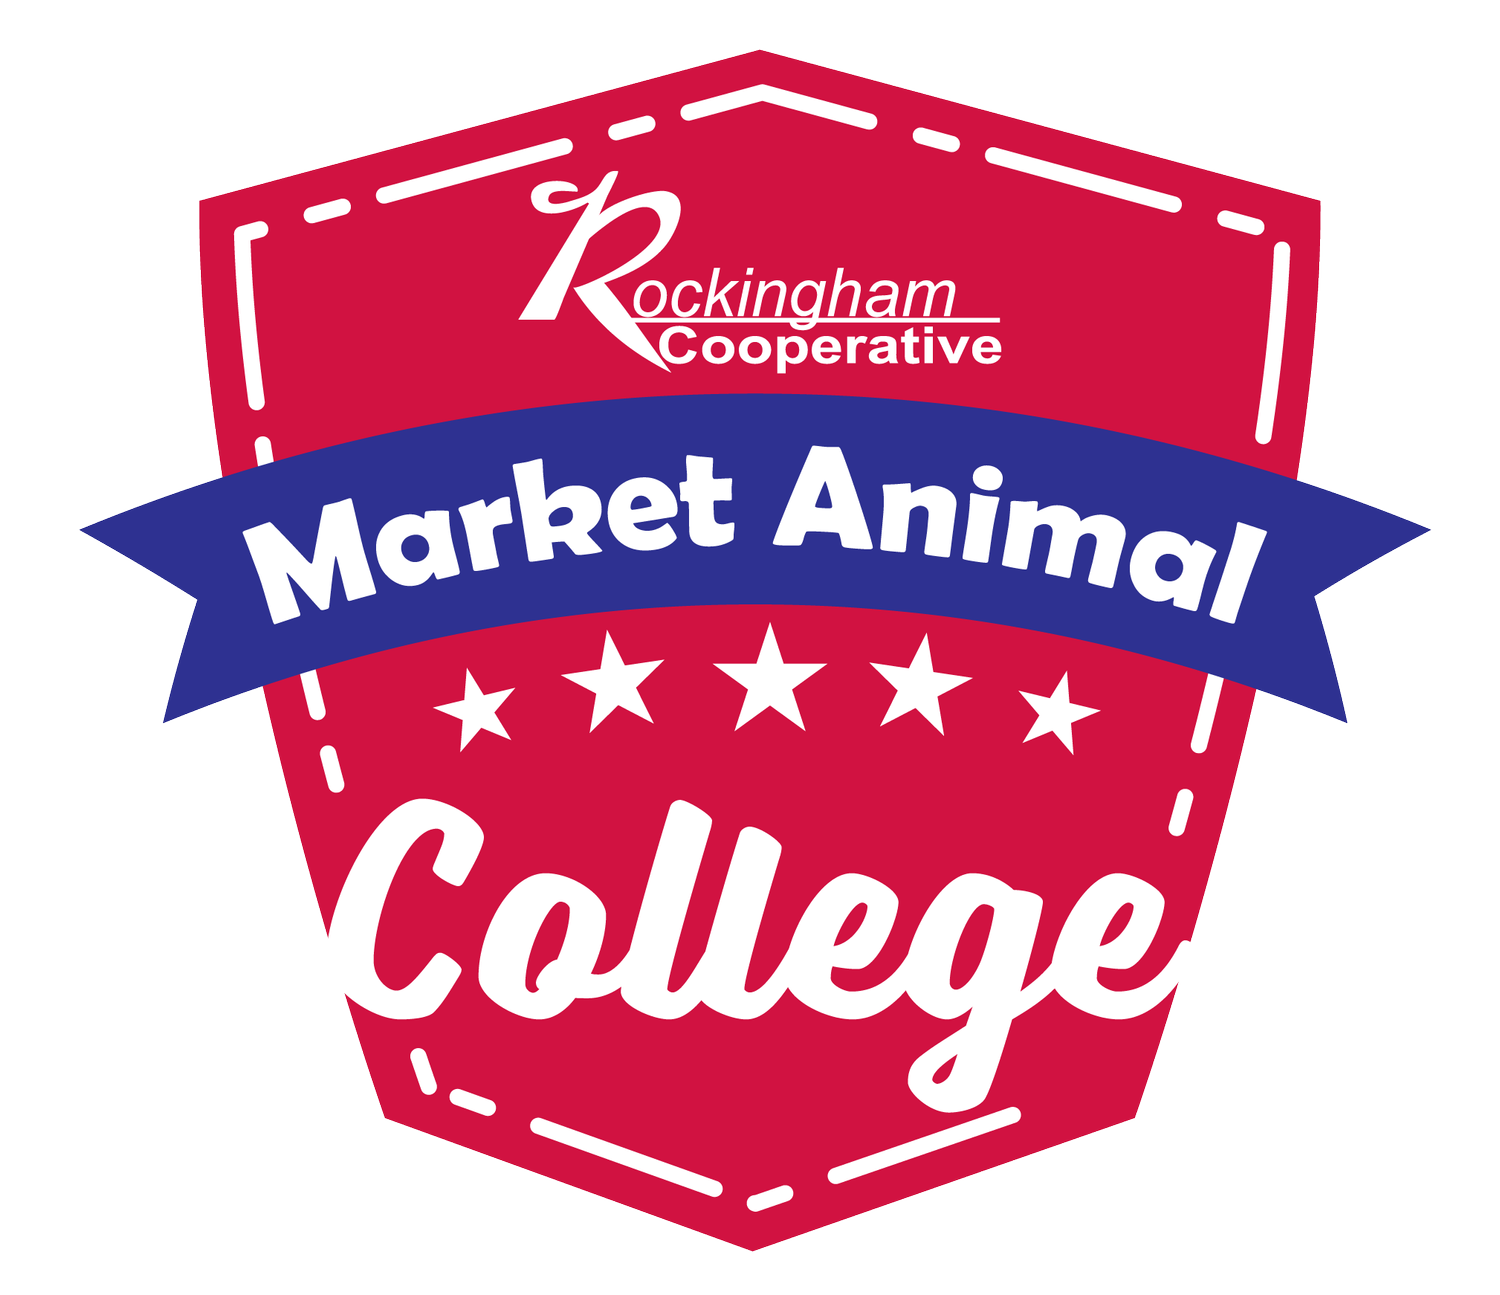 Market Animal College